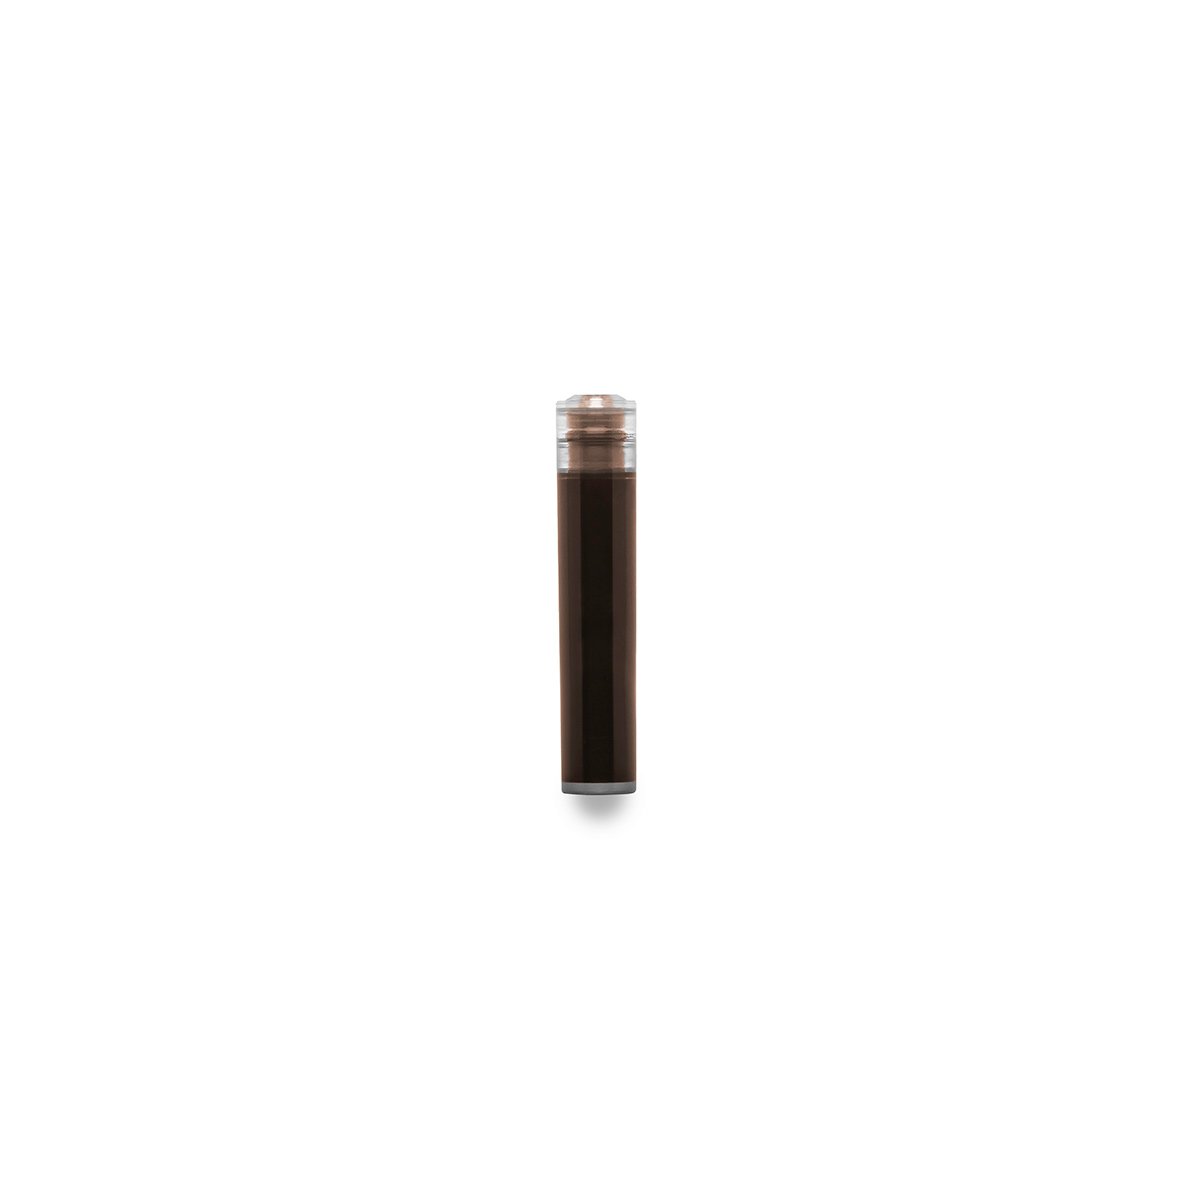 BRUN RICHE - RICH BROWN - liquid eyeliner refill cartridge in brown shade